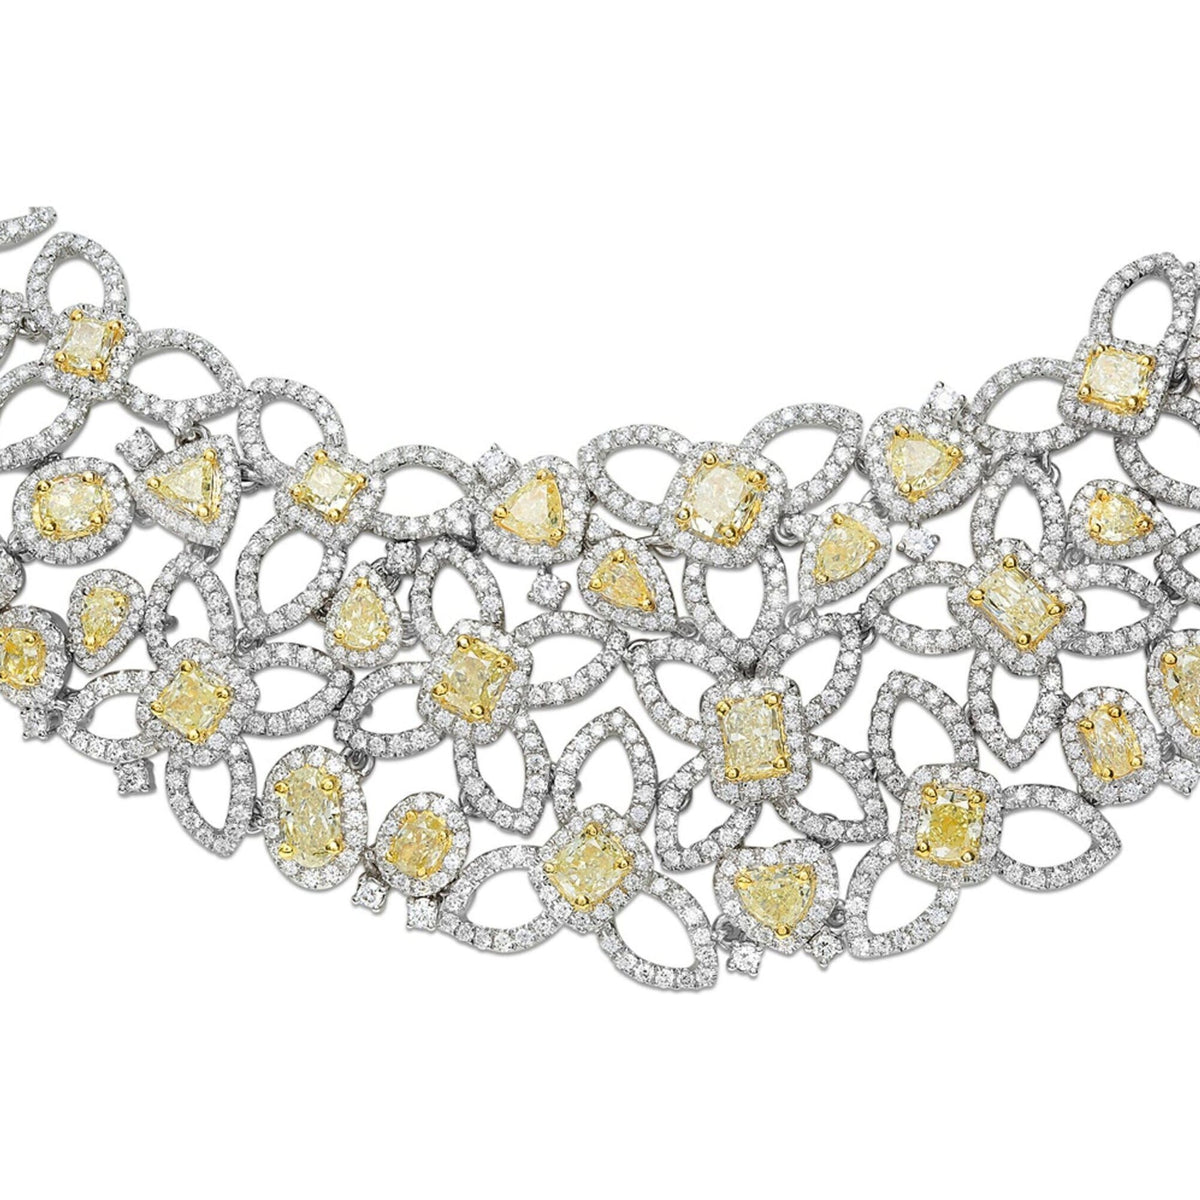 Elegant diamond celestial bib necklace by Roman Jules